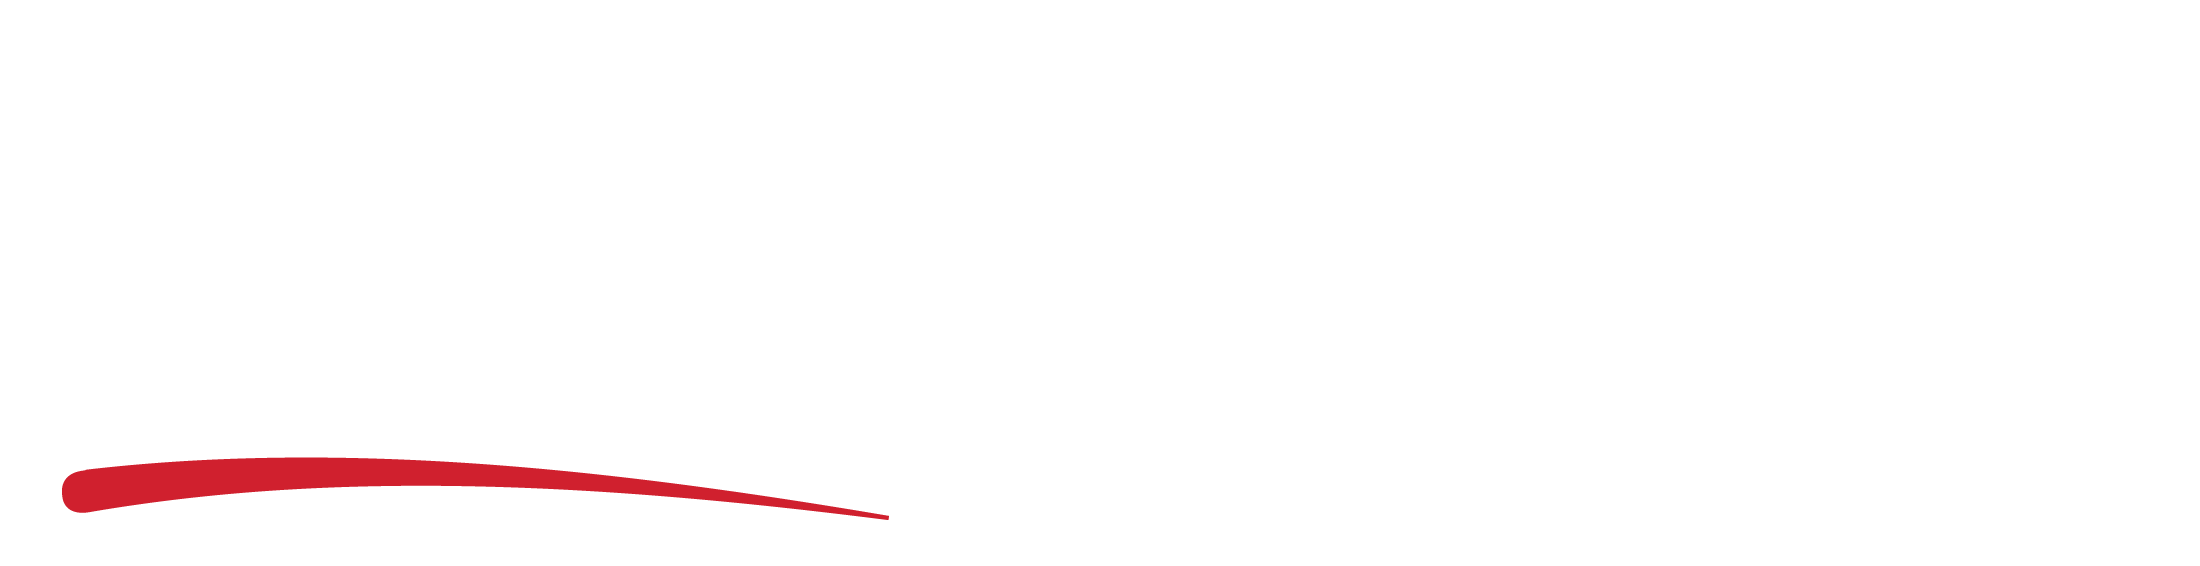 Logo: Conservation Law Foundation